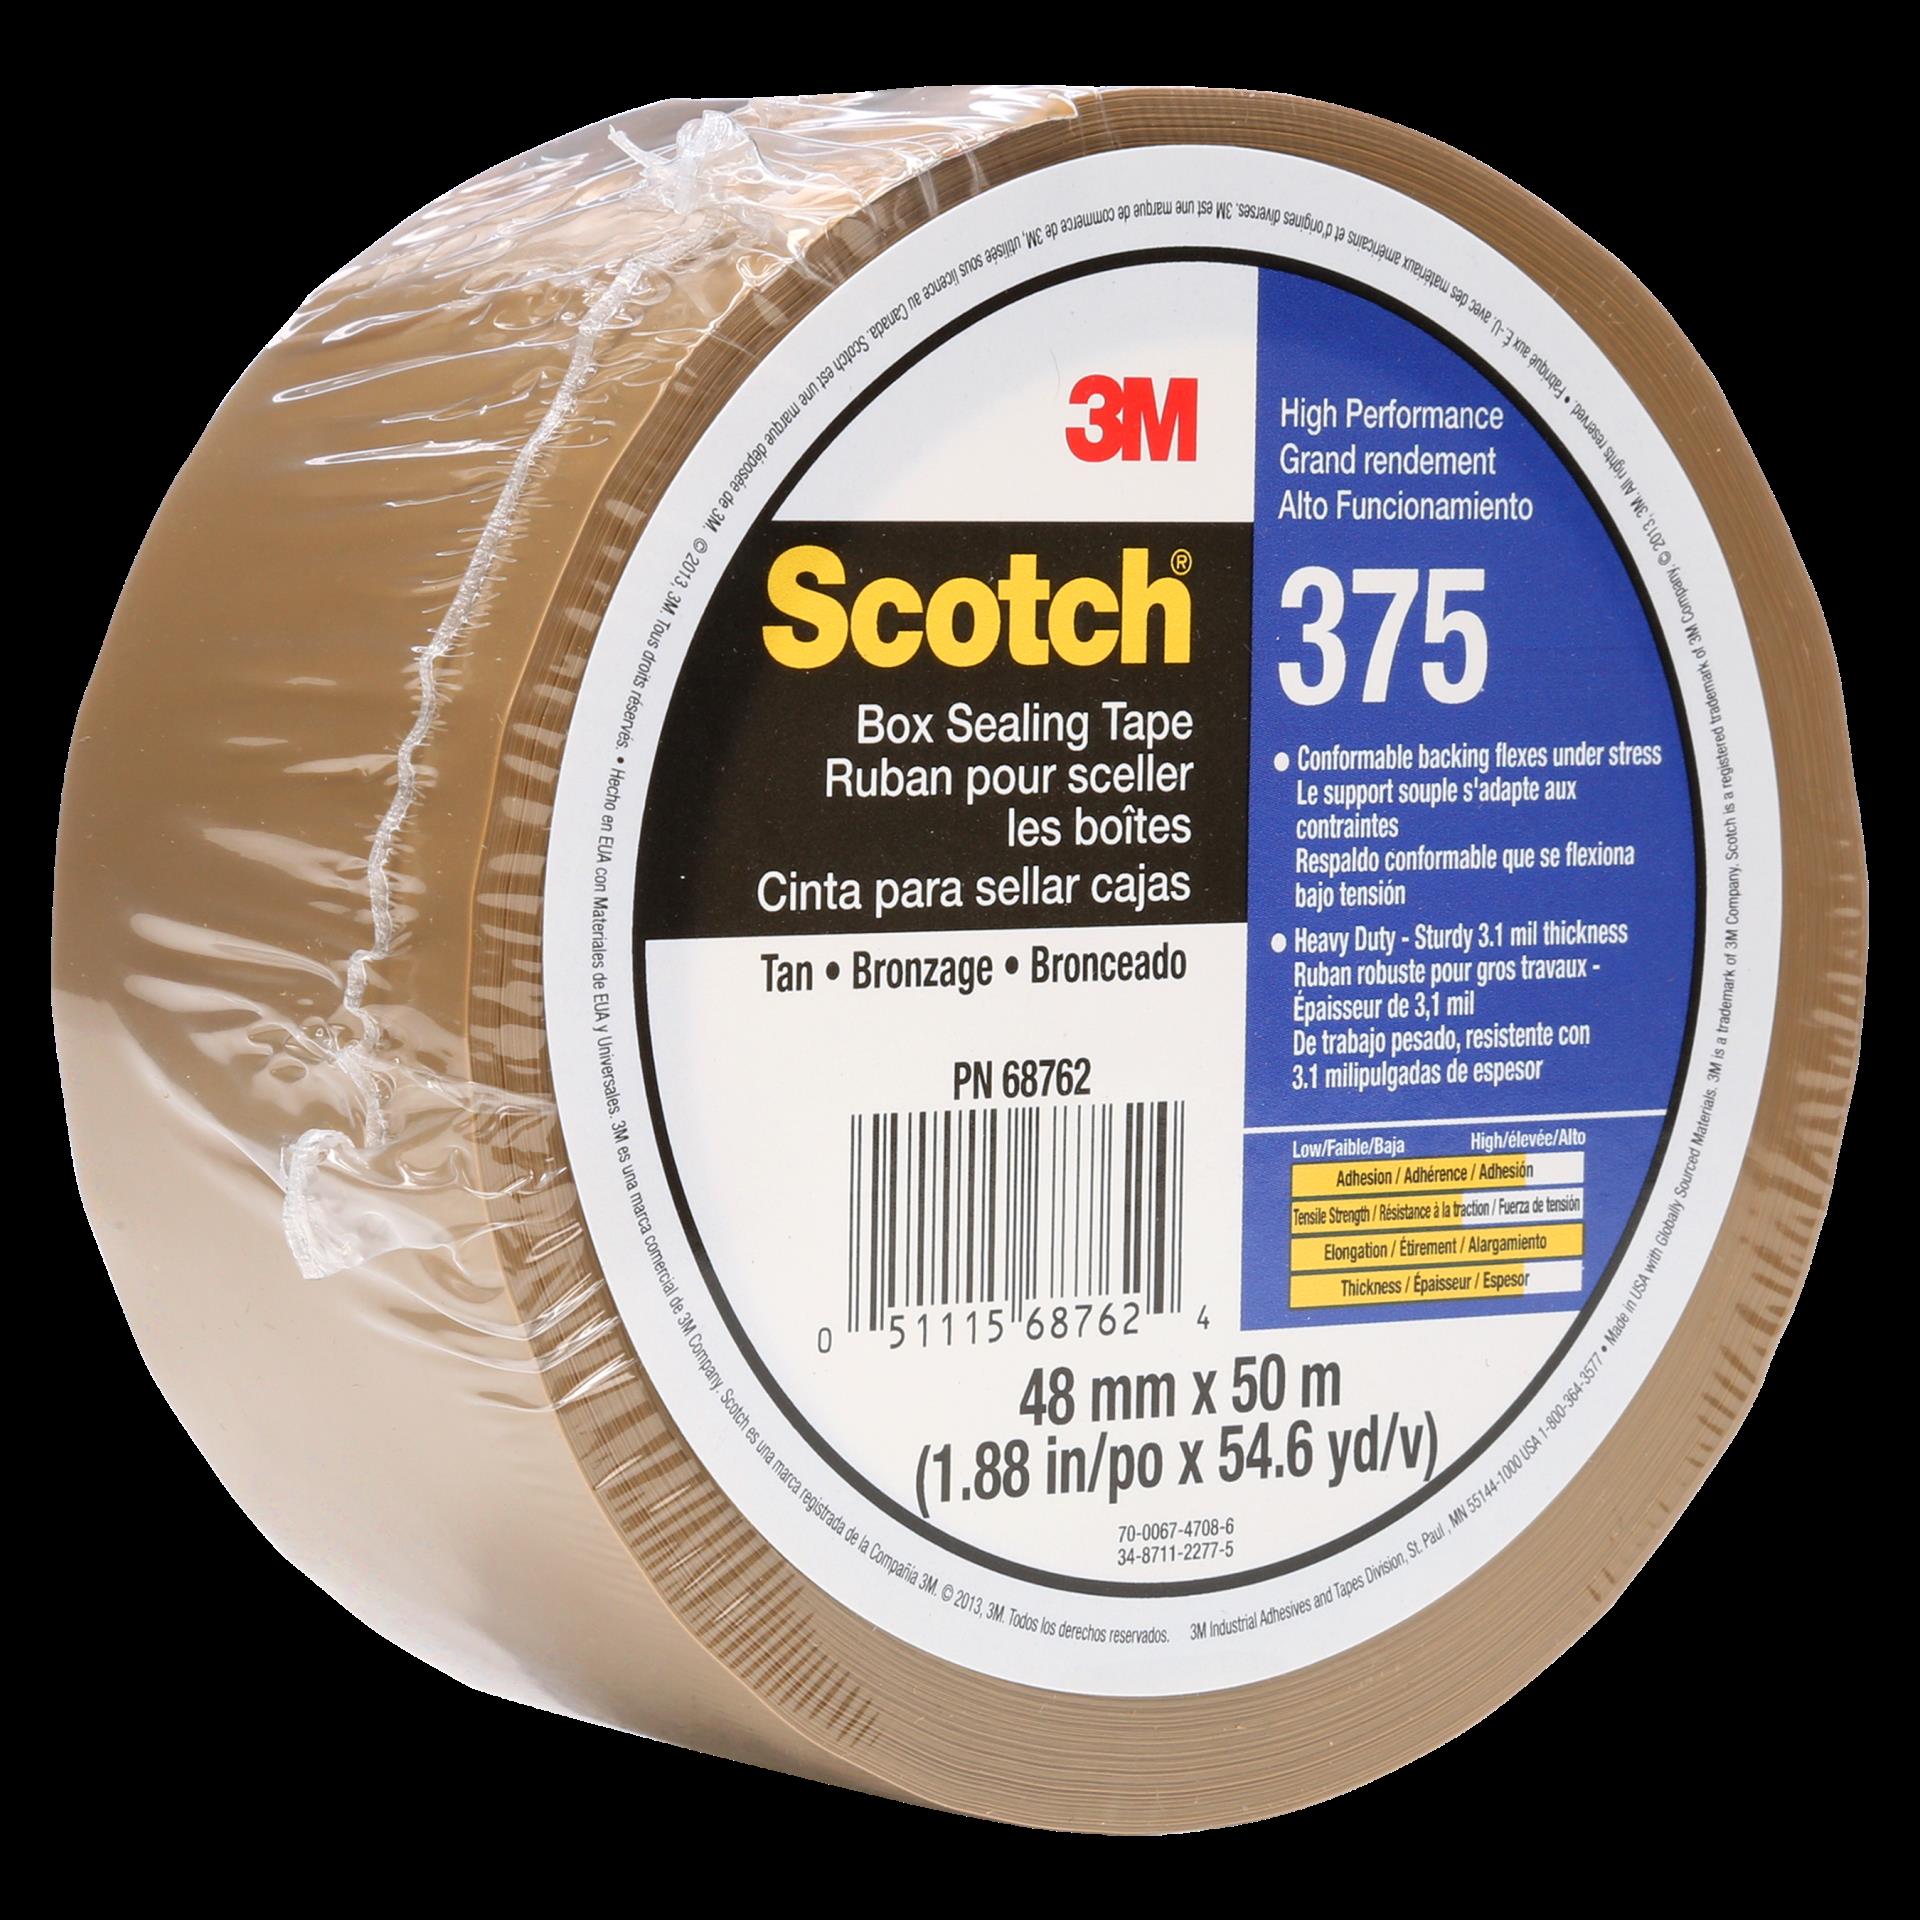 Scotch Box Sealing Tape 375 Clear 1EA High Performance 72 mm x 50 m 